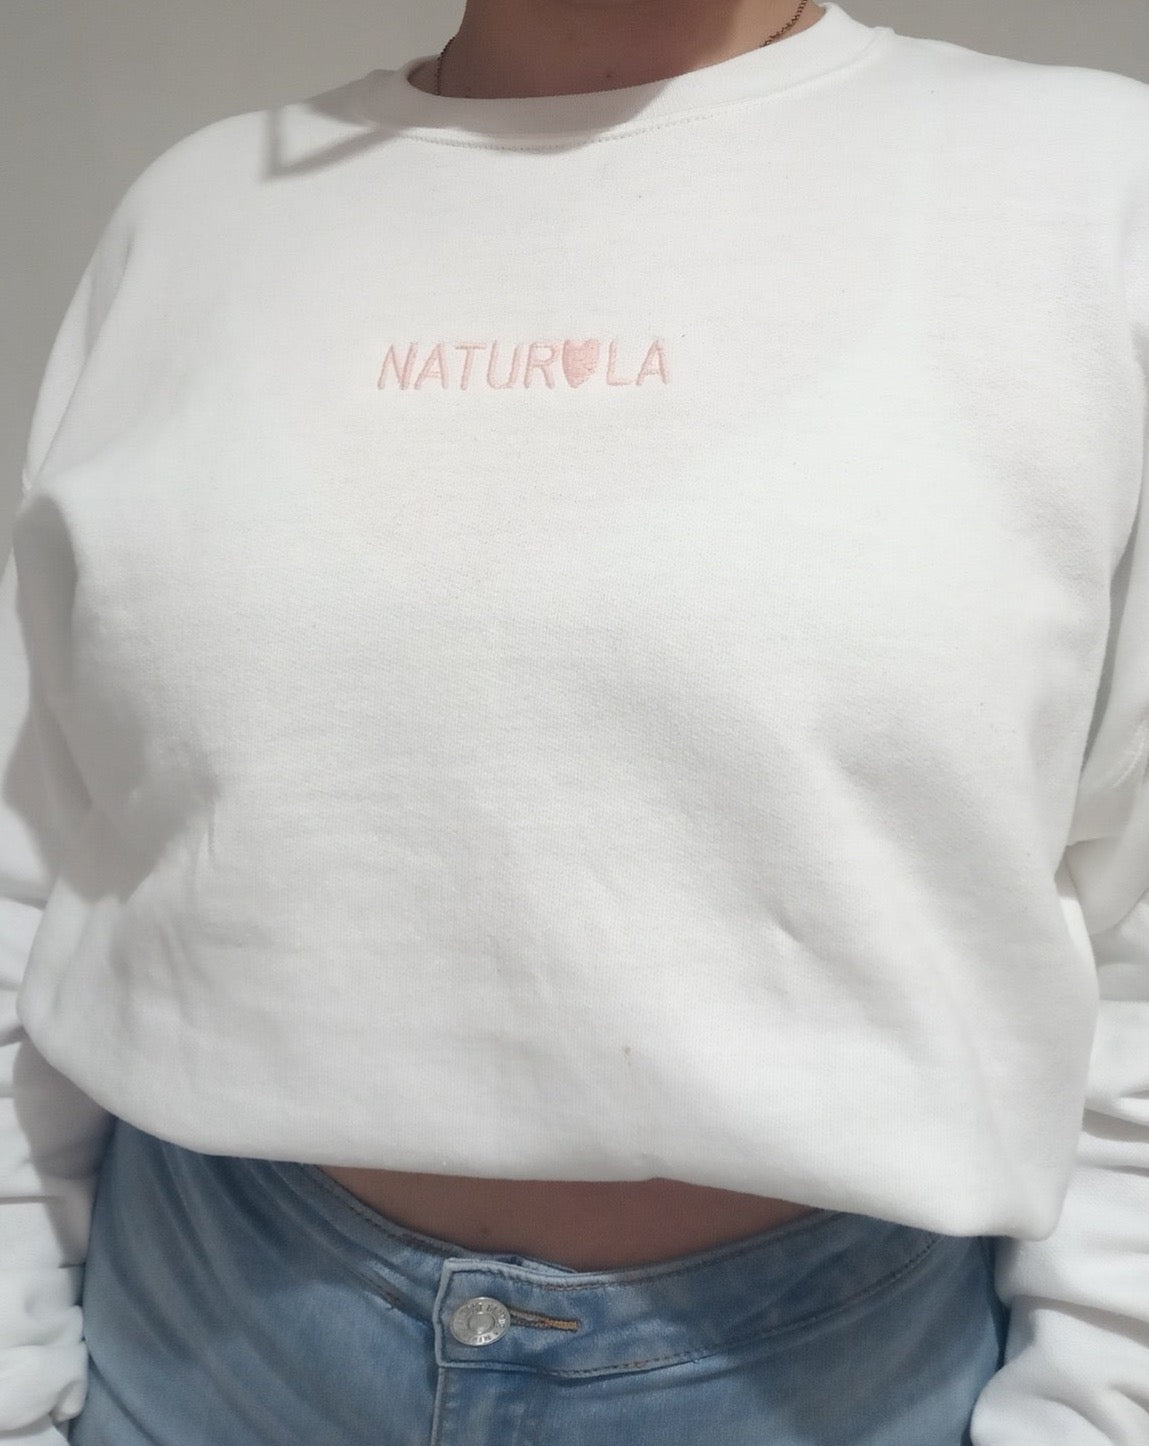 NATUROLA sweatshirt